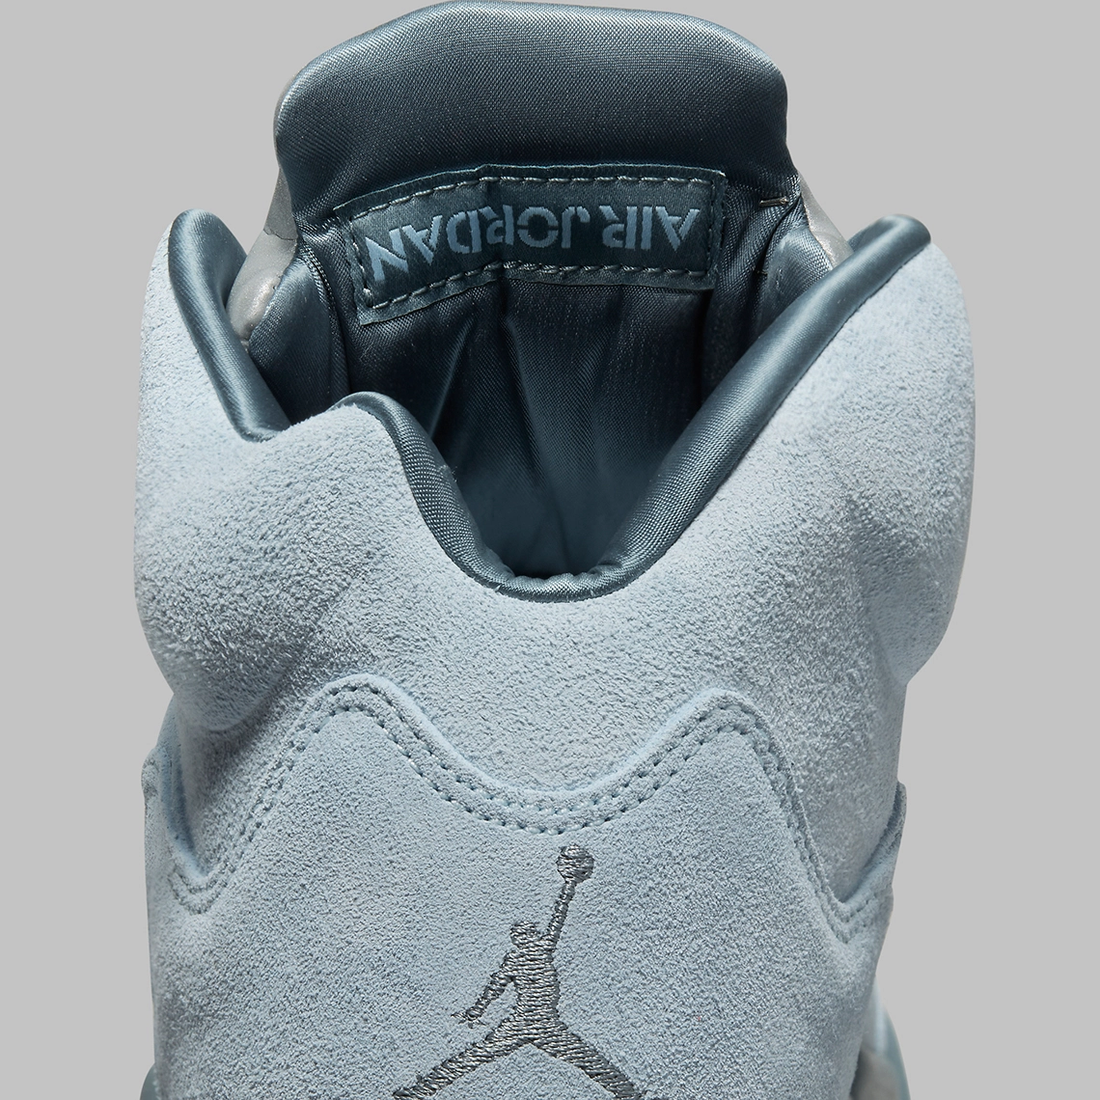 Nike Sneakers, Jordan 5 Retro ‘Bluebird’ (W)